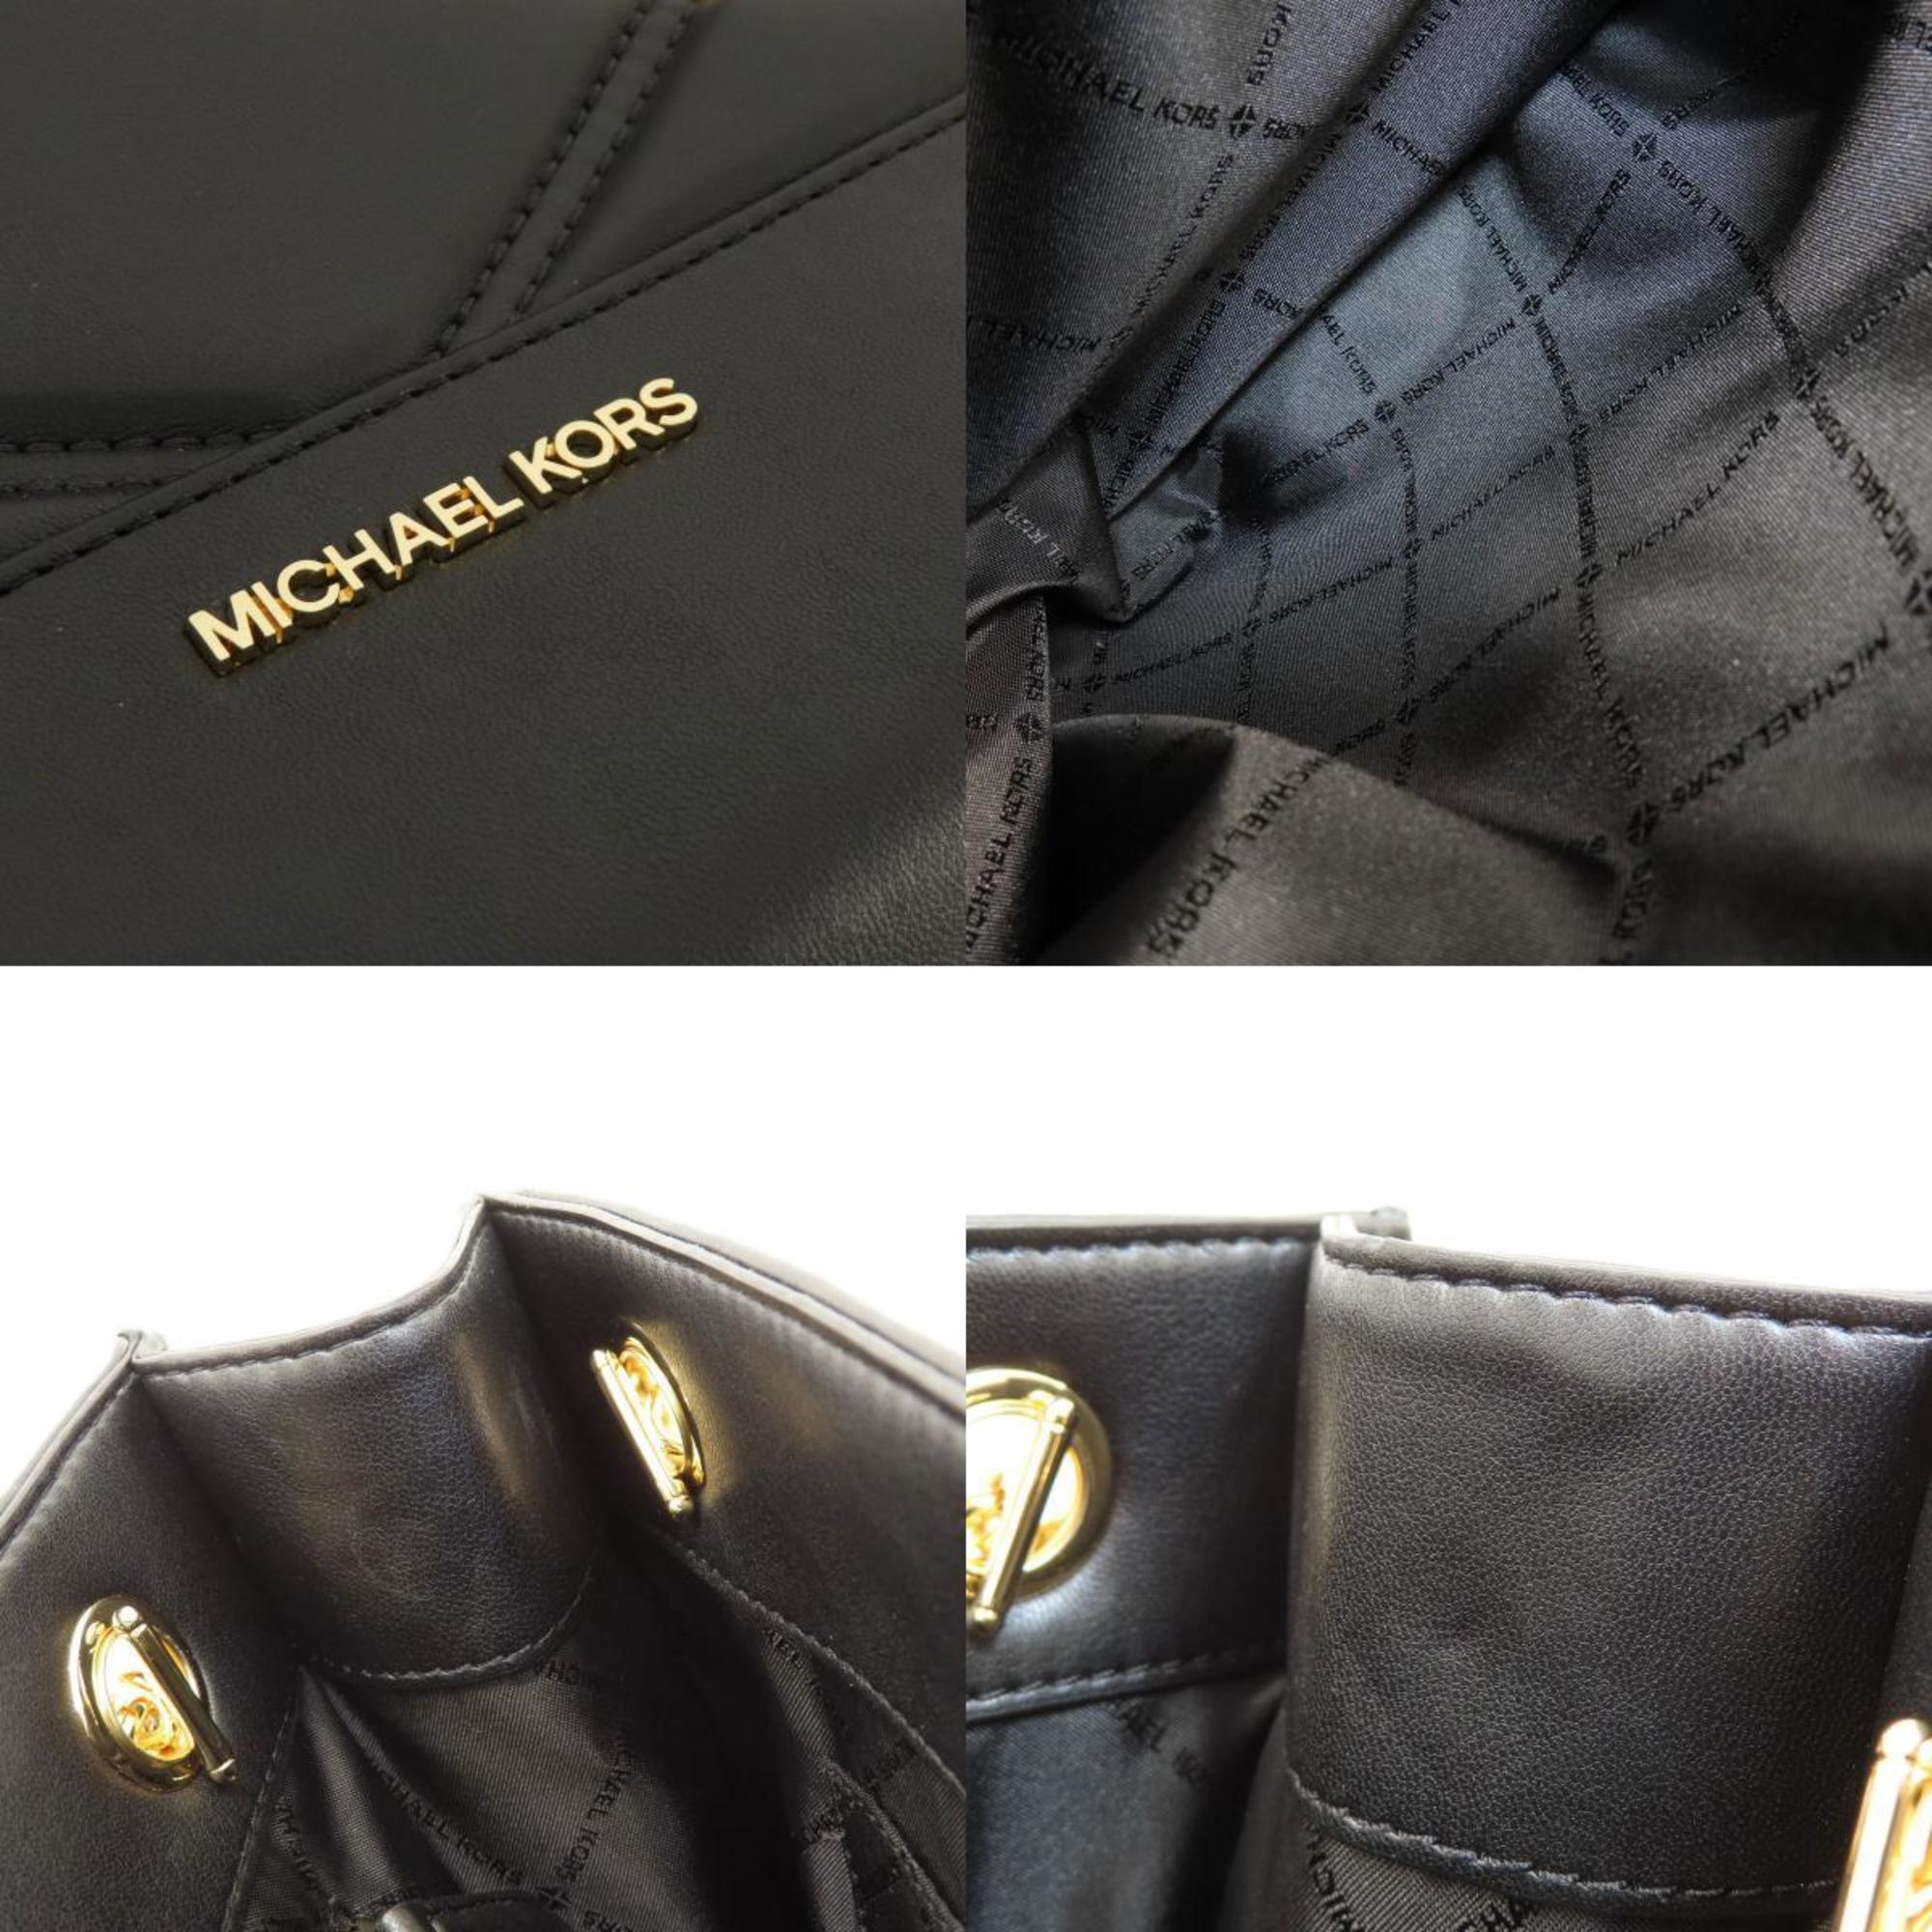 Michael Kors Serena Large Tote Bag Leather Women's